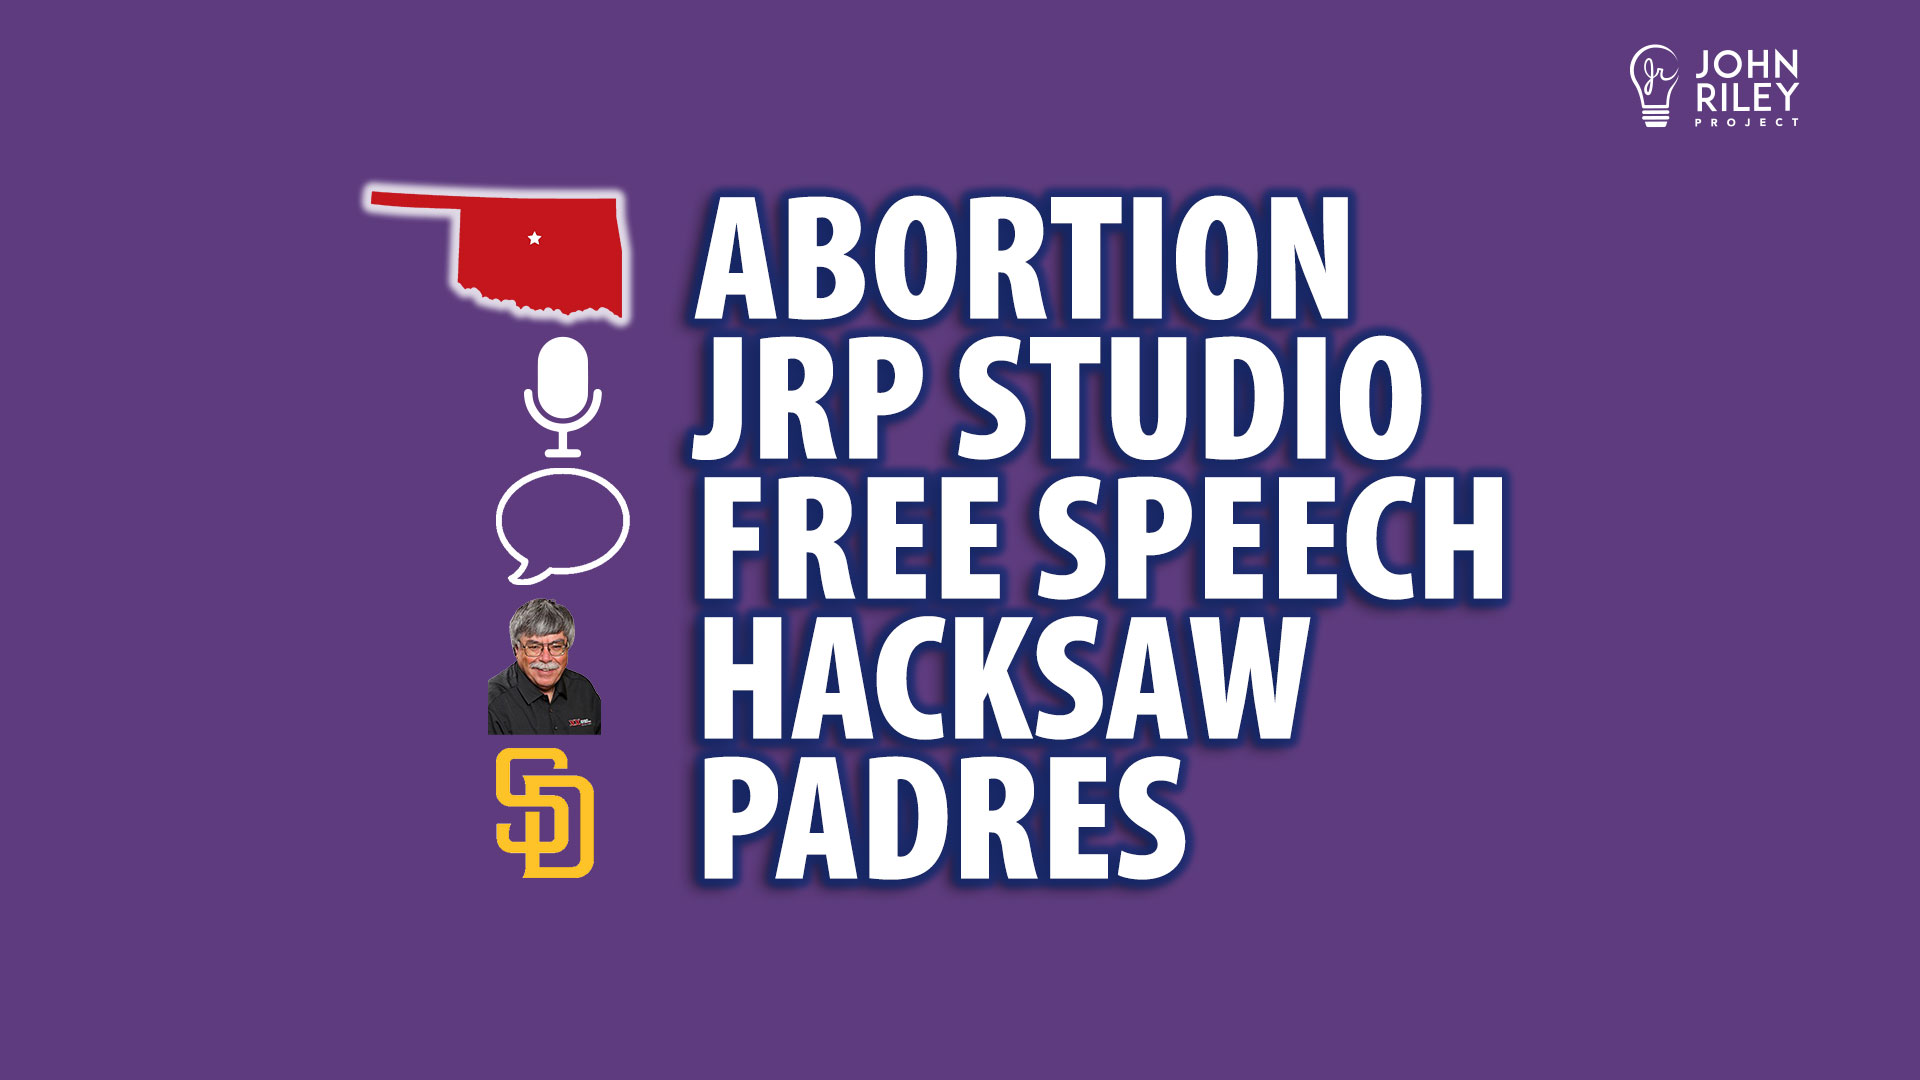 oklahoma abortion, free speech, poway, hacksaw, padres, john riley project, jrp0272